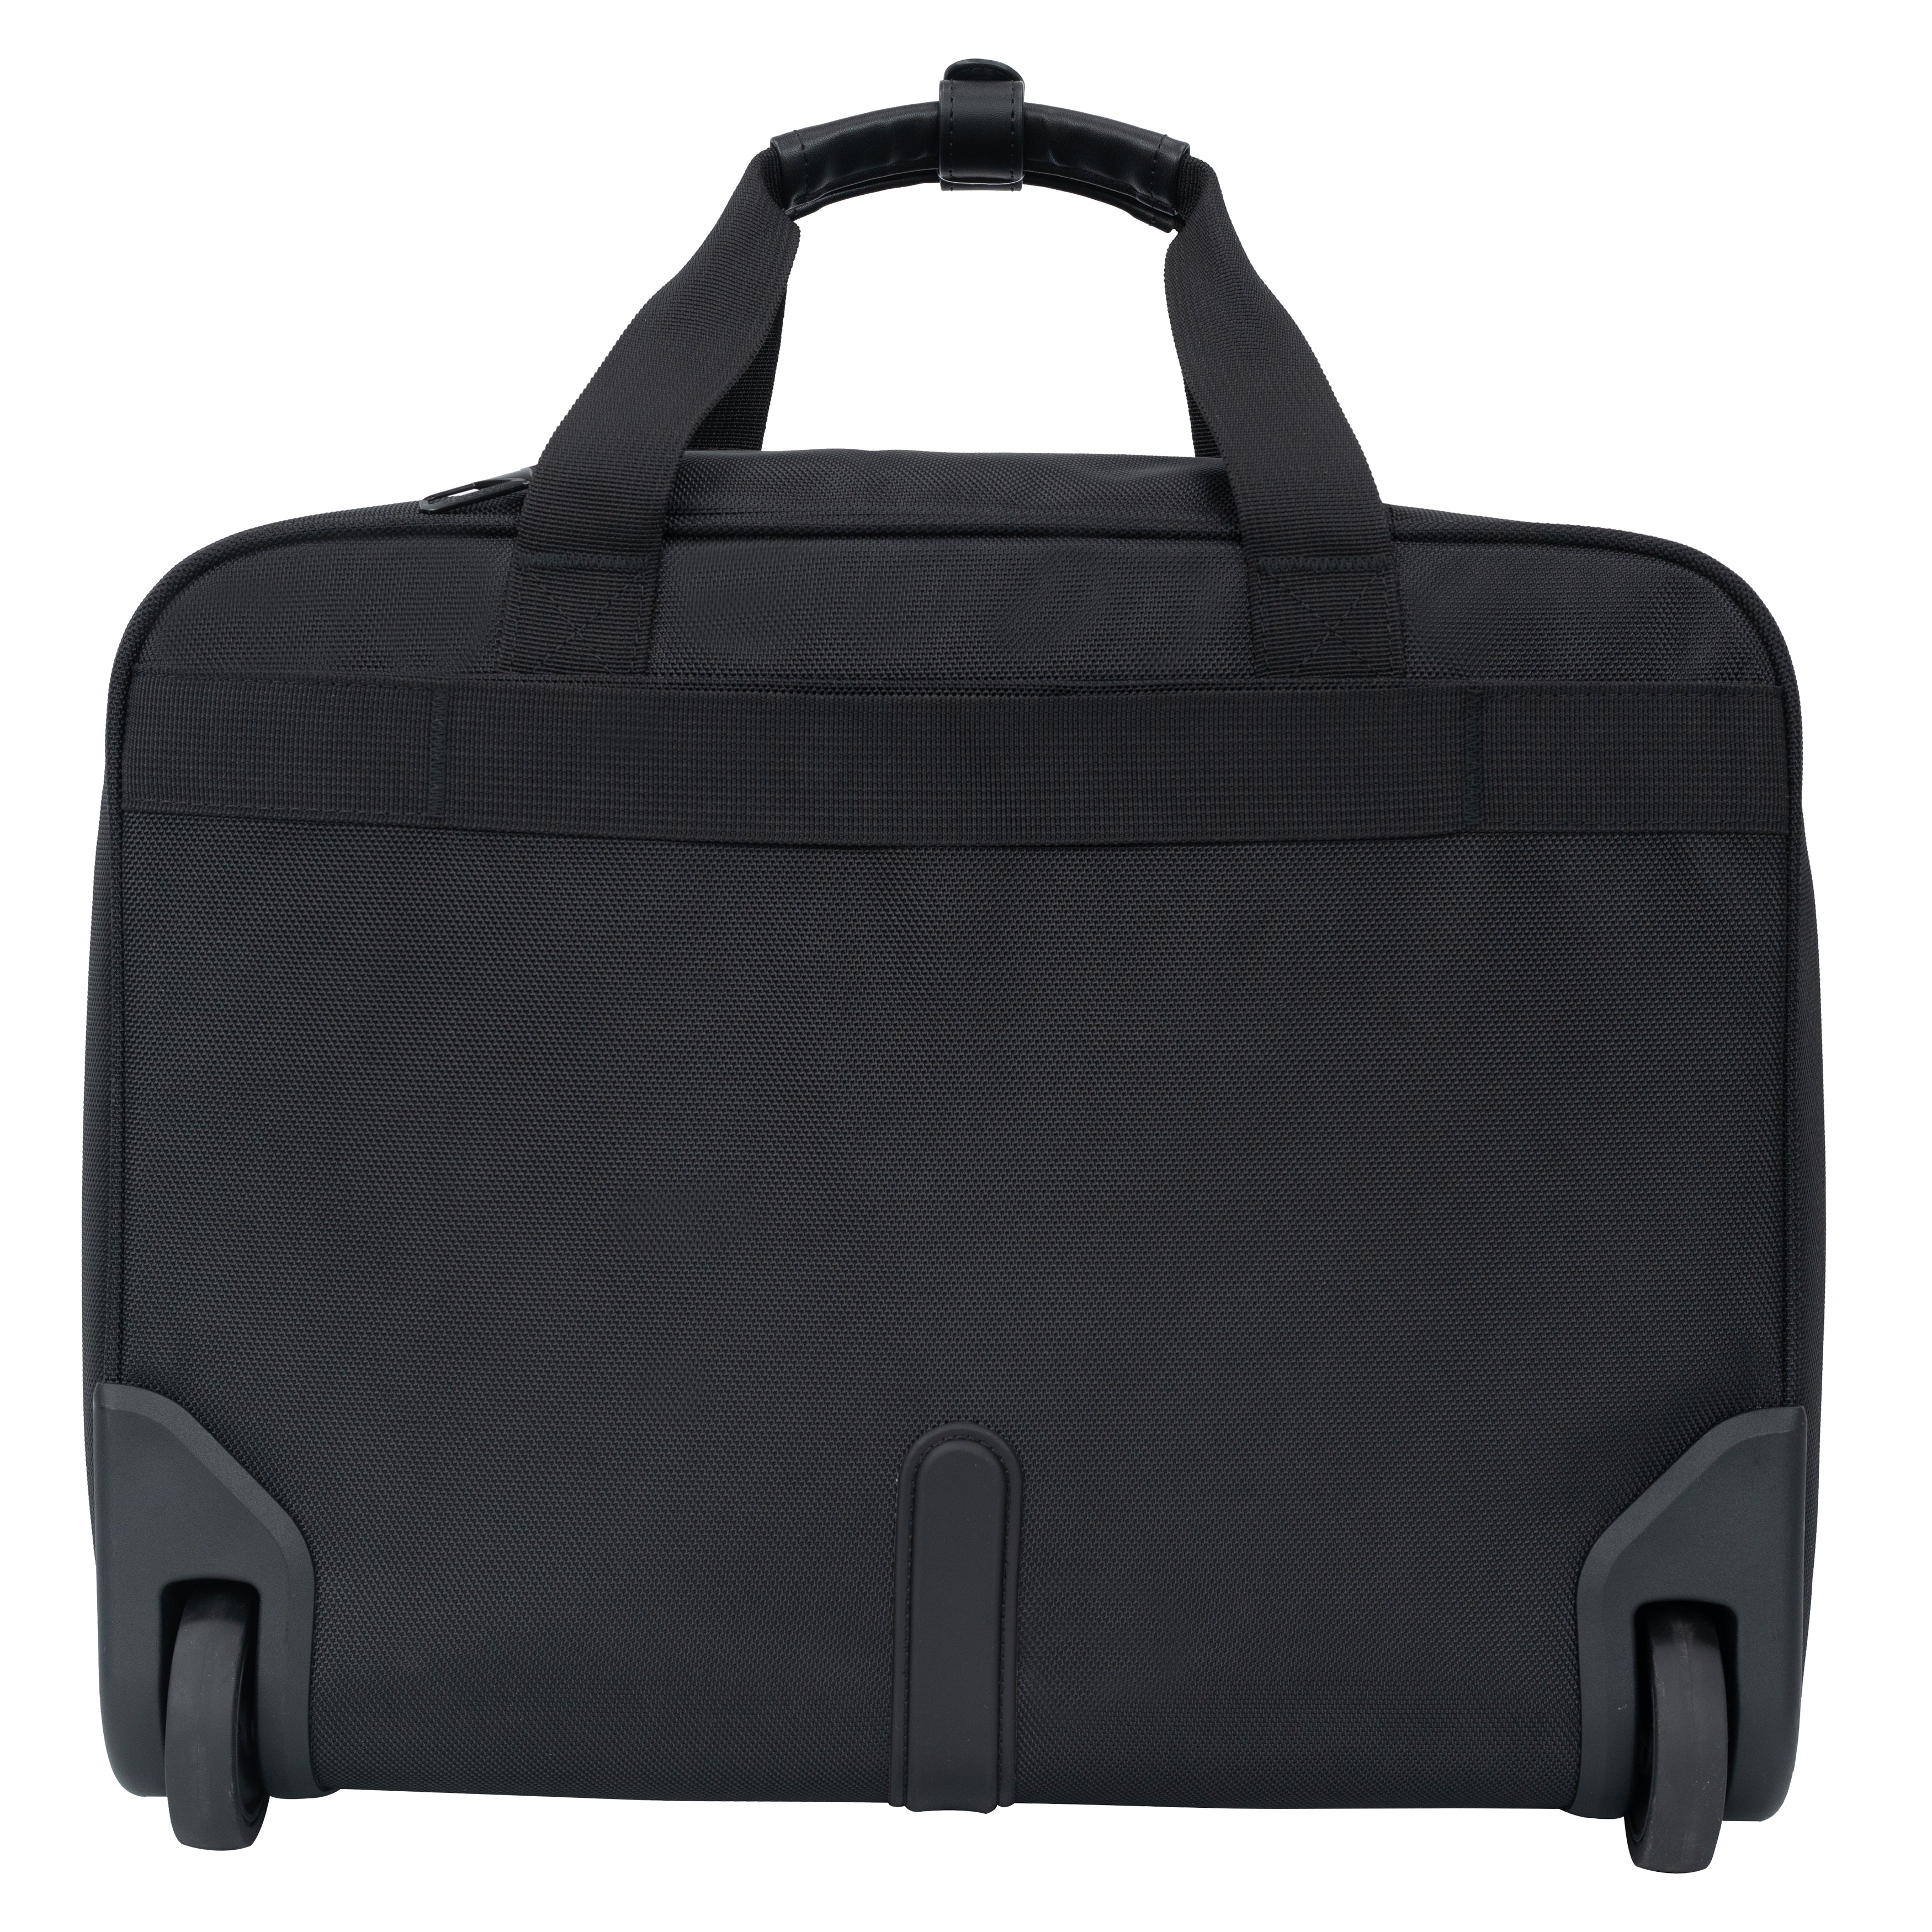 Cabinpro Premium Pilot Case Trolley Water Resistant Multi Compartment Fashion Trolley Laptop Bag for Men, Women on Travel, Business, CP010